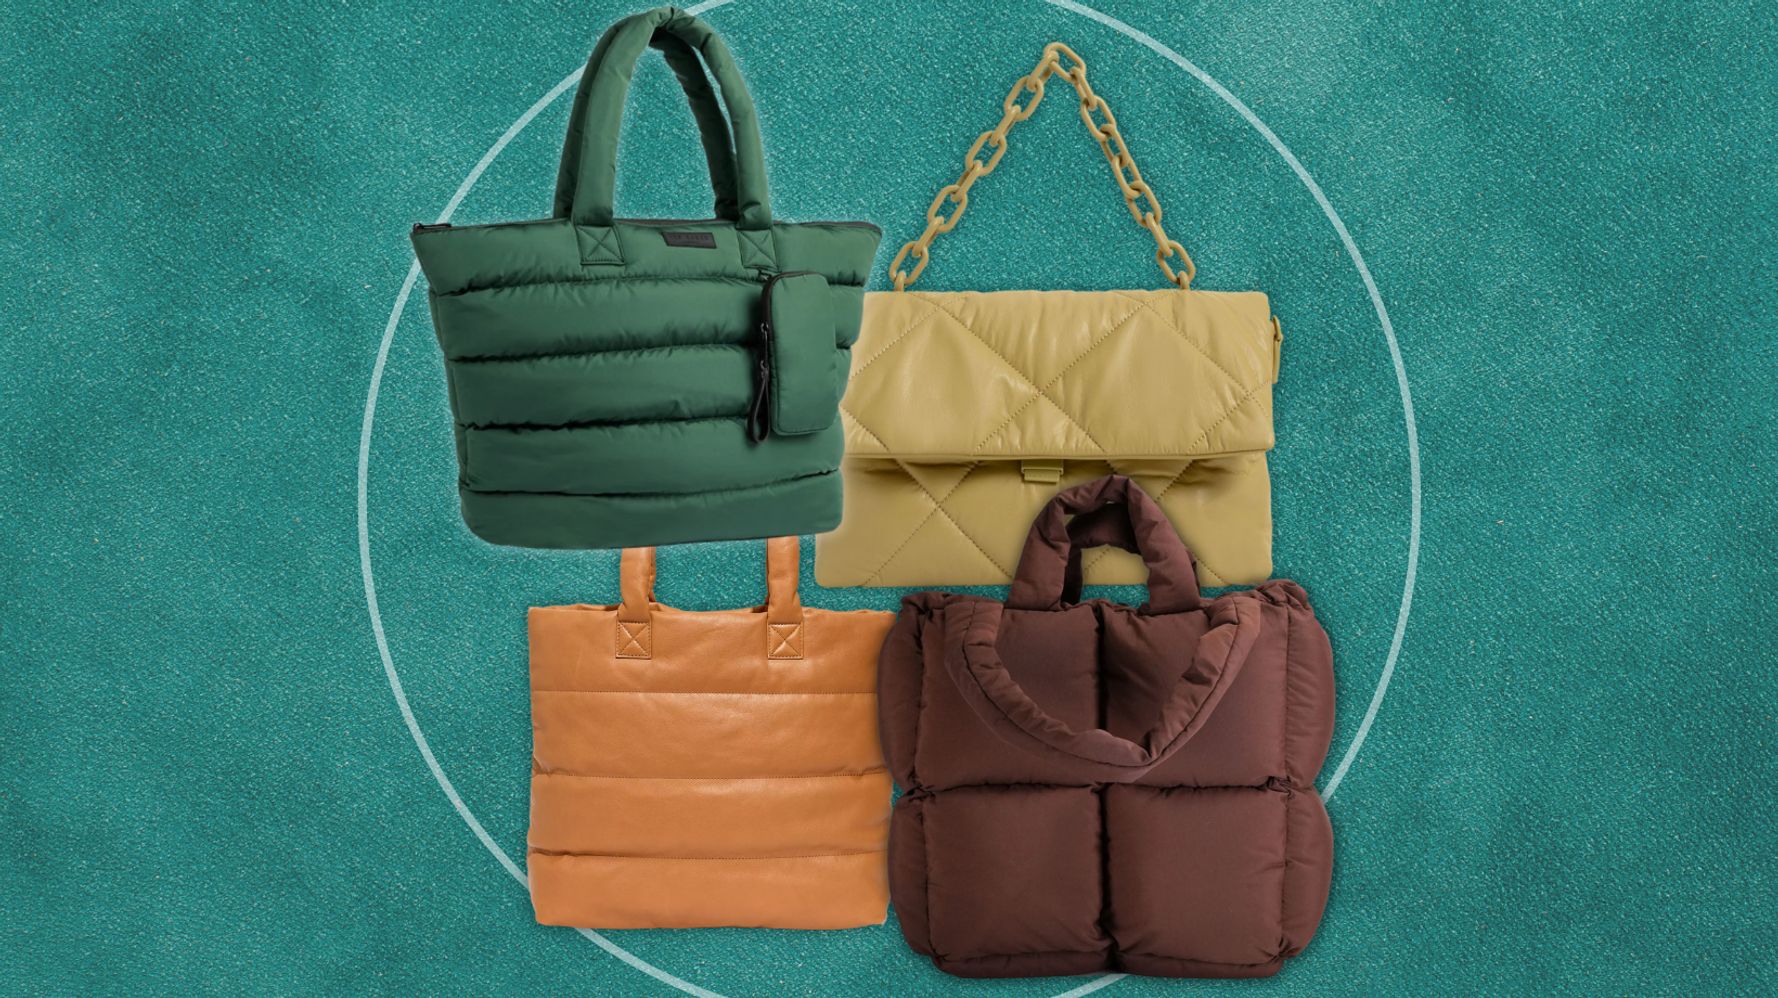 TWENTY FOUR Checkered Tote Shoulder Bag Large Handbags for Women - PU Vegan  Leather (Brown) 